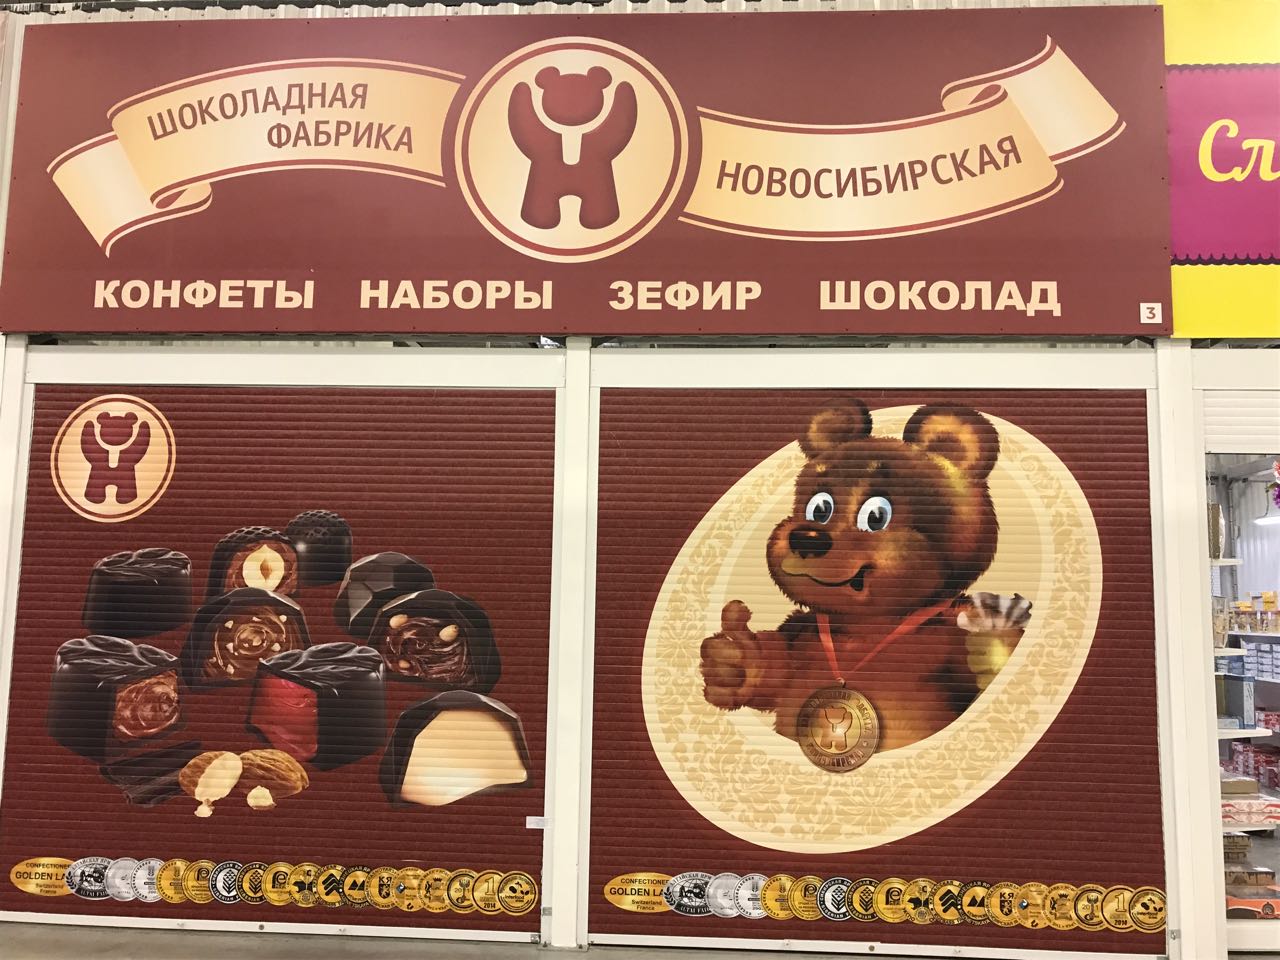 Bachmann шоколадная фабрика. Новосибирская шоколадная фабрика конфеты Новосибирские. Конфеты Новосибирской шоколадной фабрики в Новосибирске. Новосибирская шоколадная фабрика мишка. ЗАО шоколадная фабрика Новосибирская.